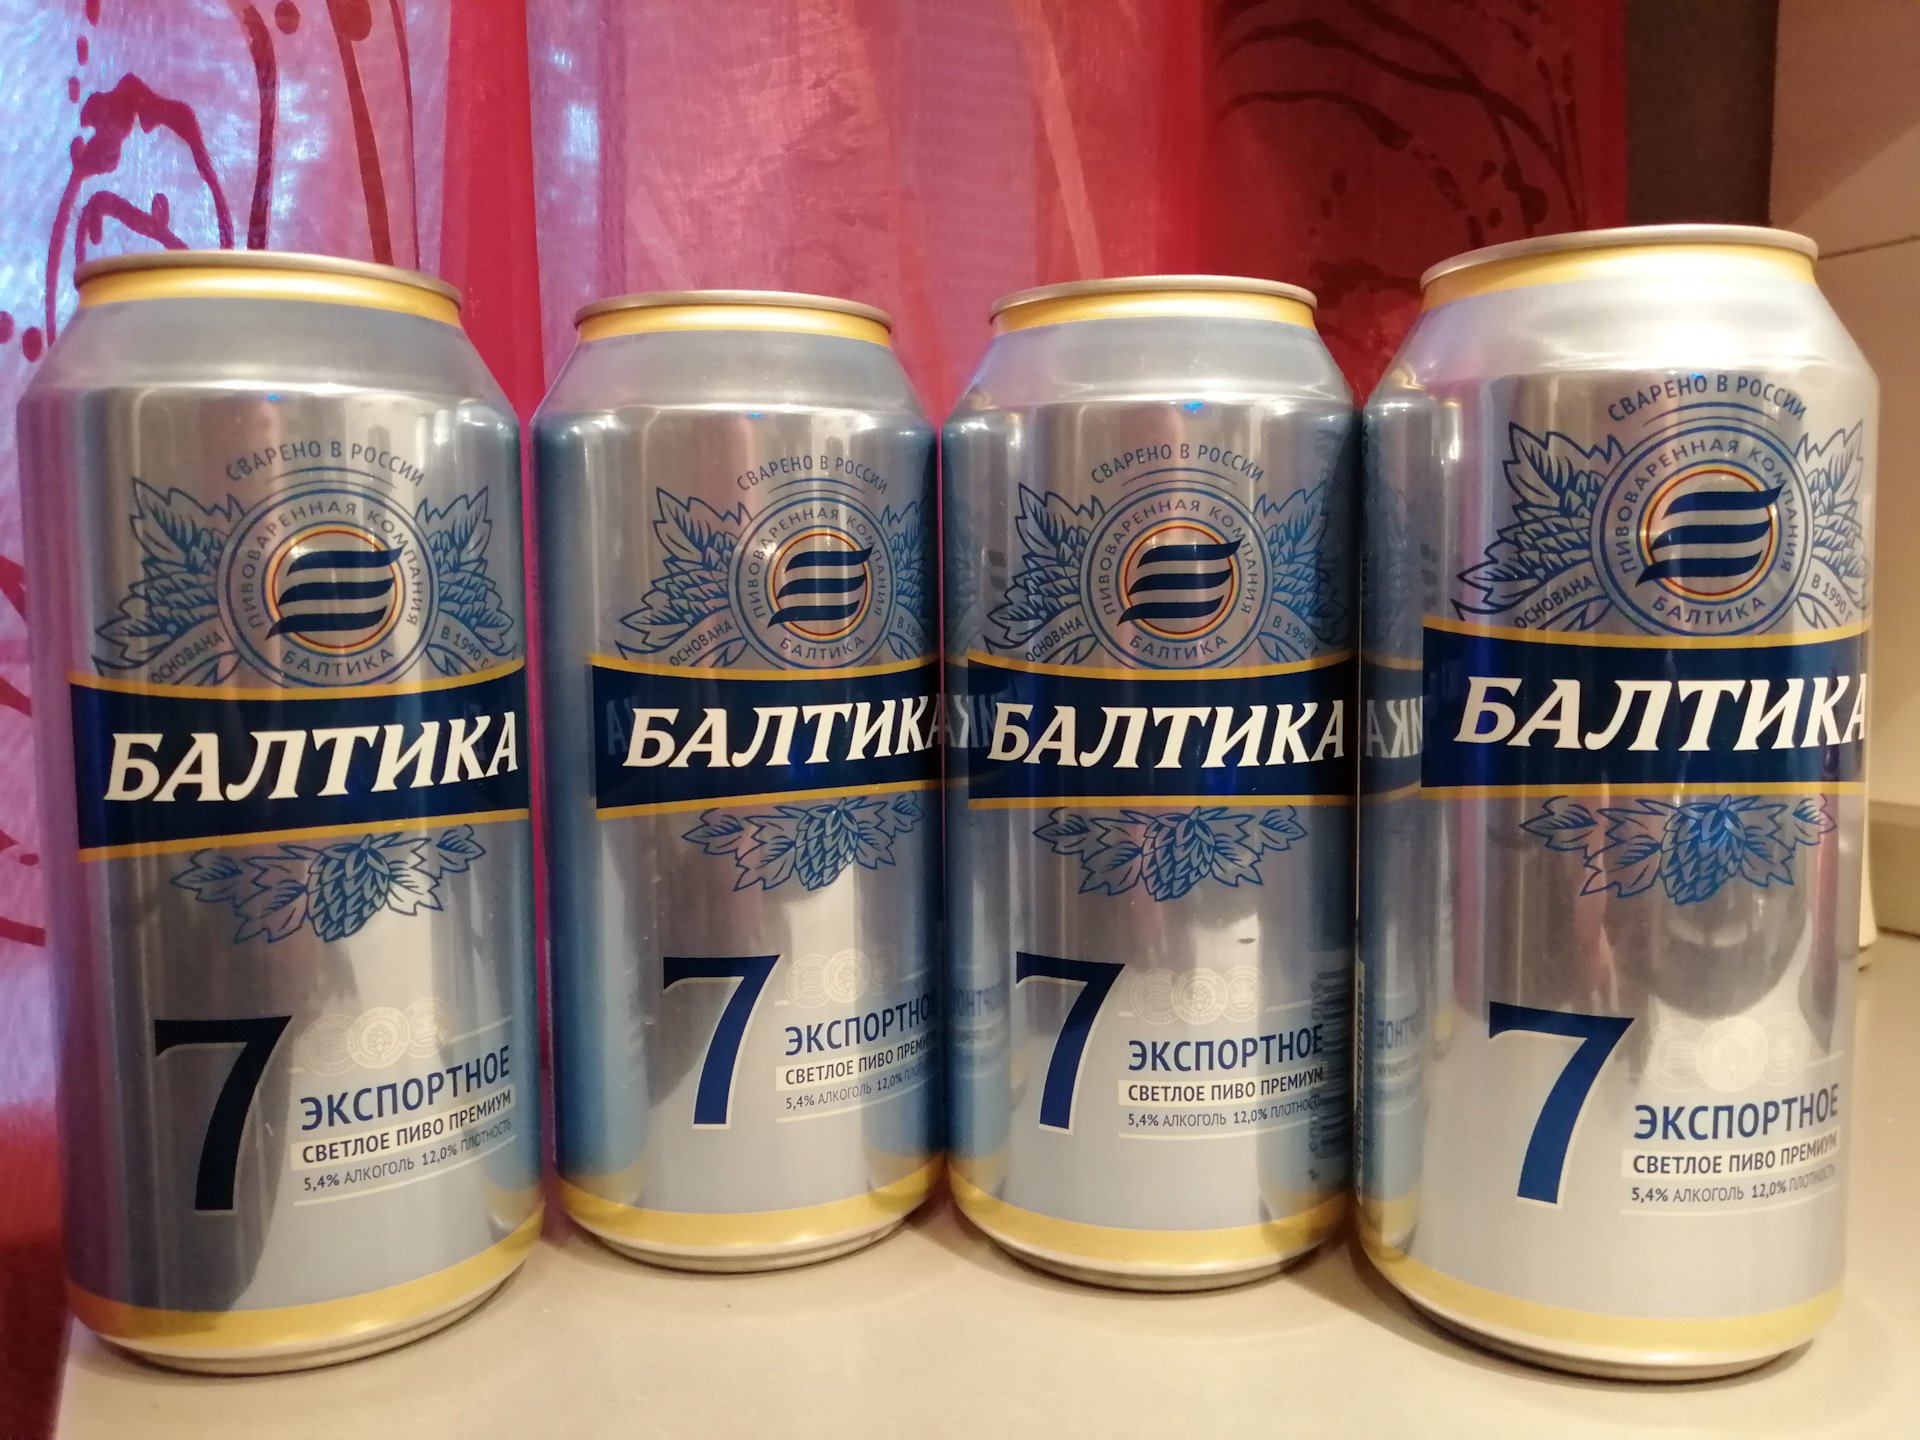 Beer 7. Пиво Балтика 7. Балтика 7 Экспортное премиум жб. Пиво Балтика 7 Экспортное. Пиво Балтика 7 в банке.